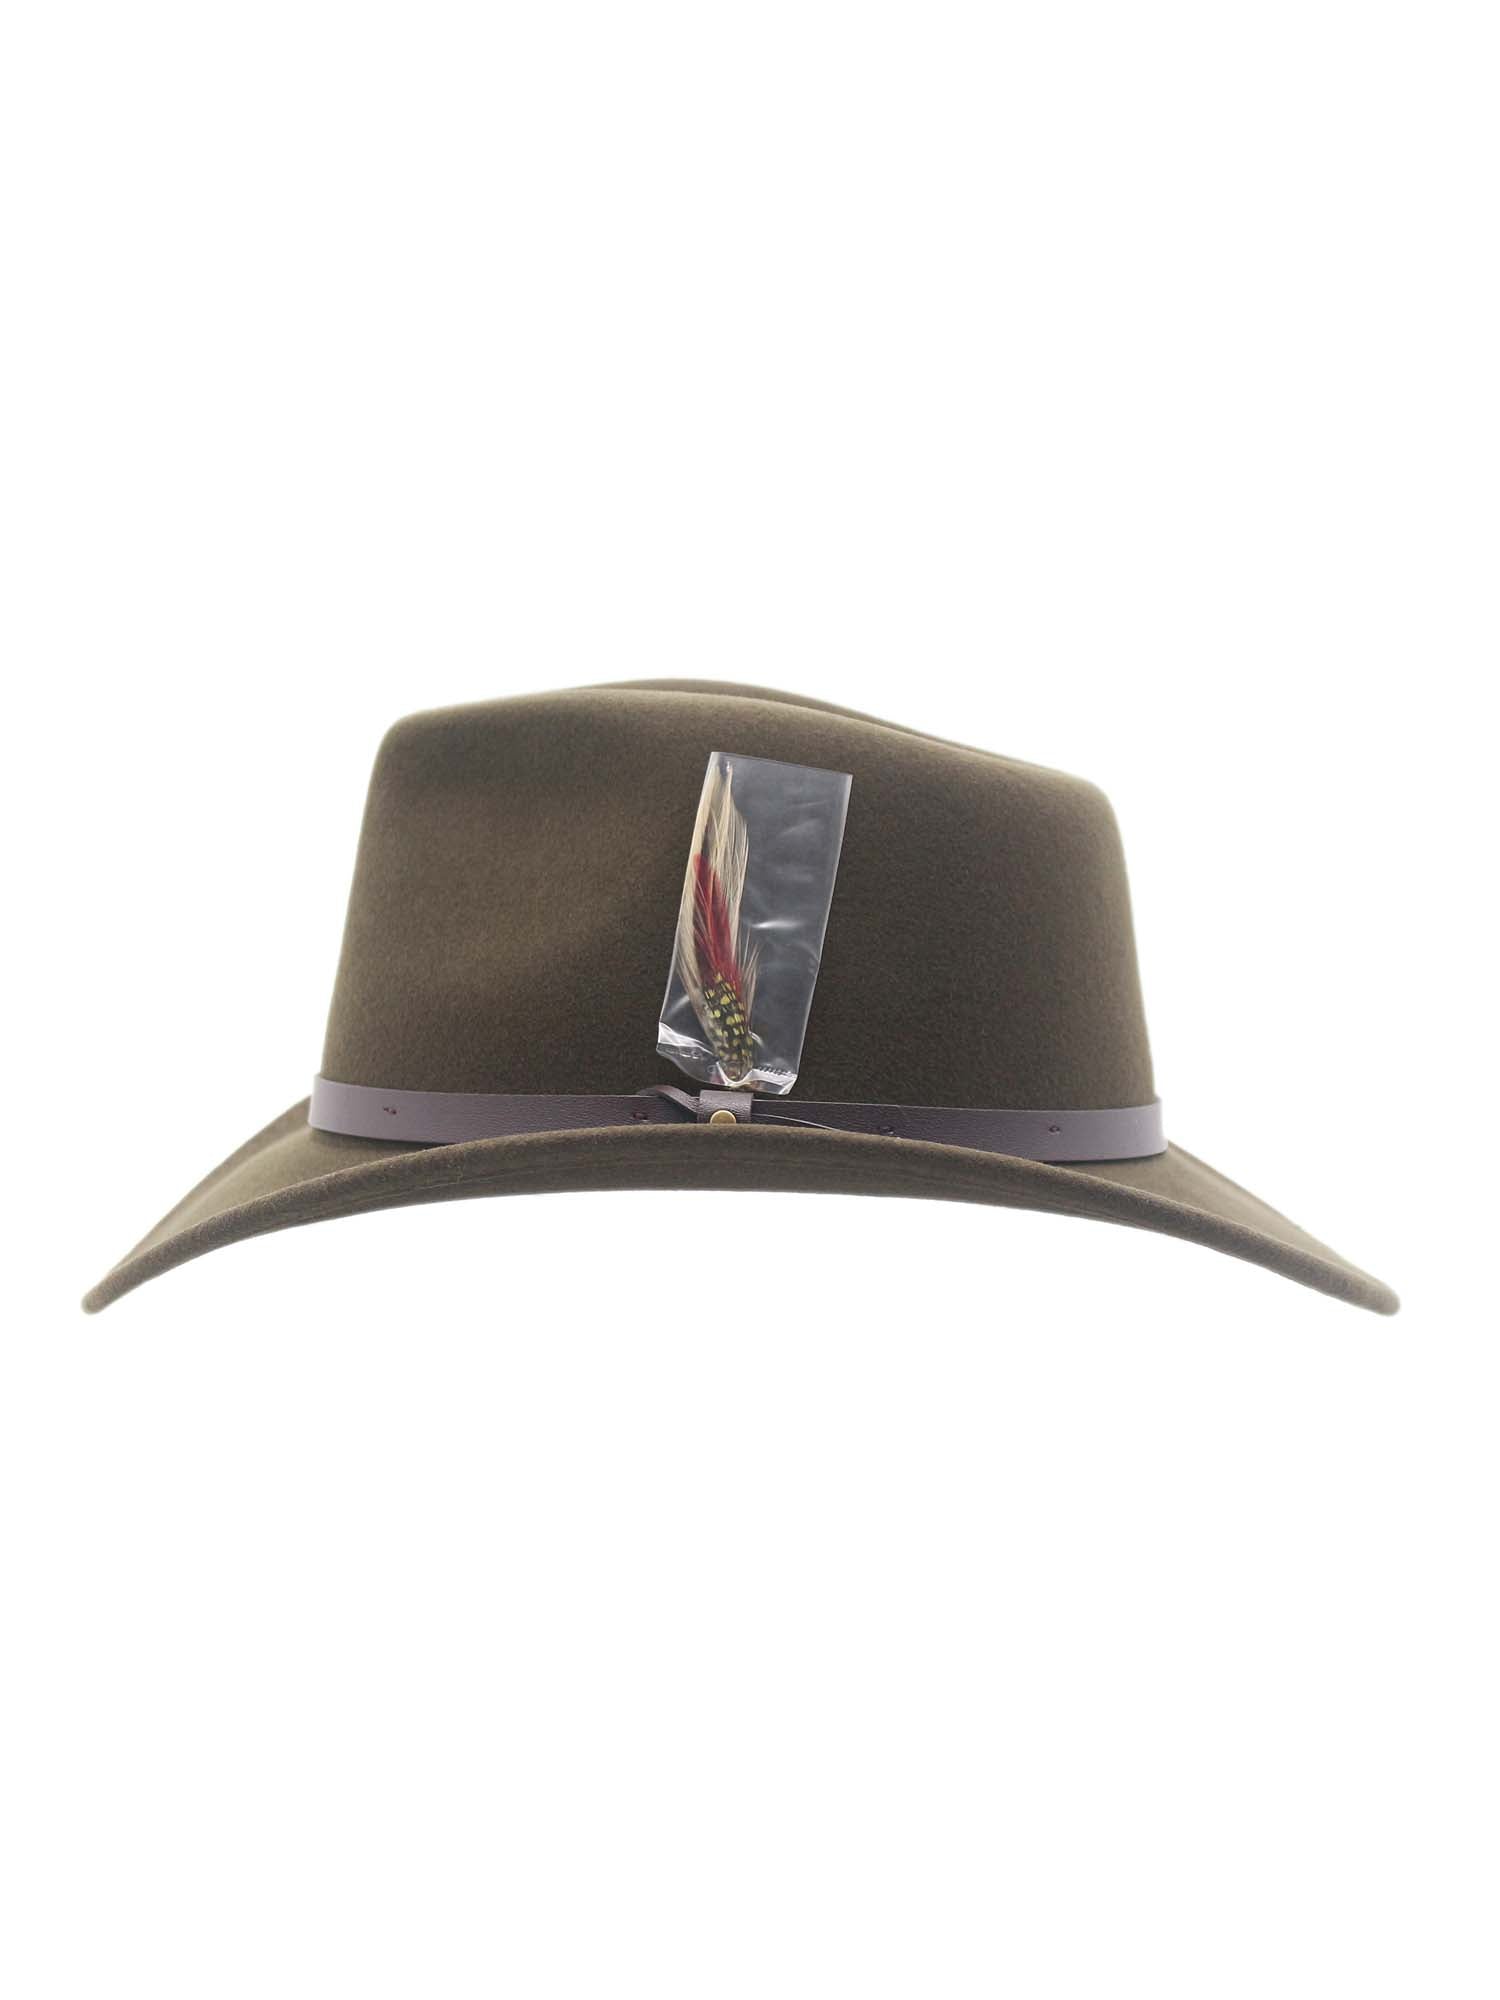 Montana Crushable Wool Felt Western Style Cowboy Hat by Silver